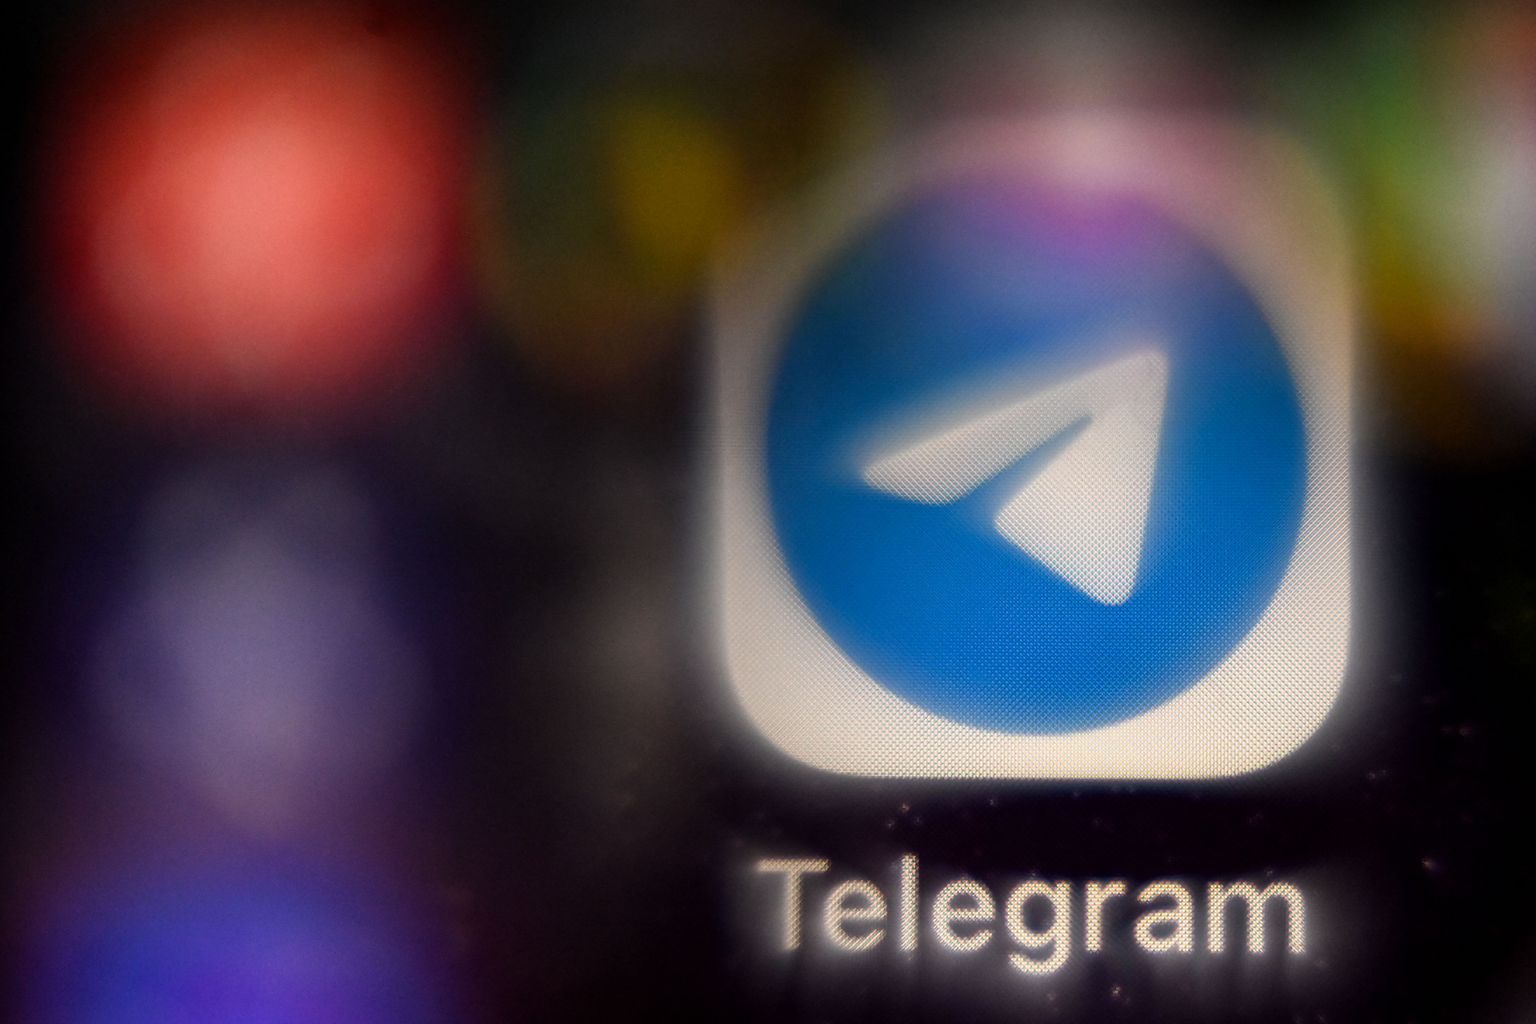 Telegrami logo.